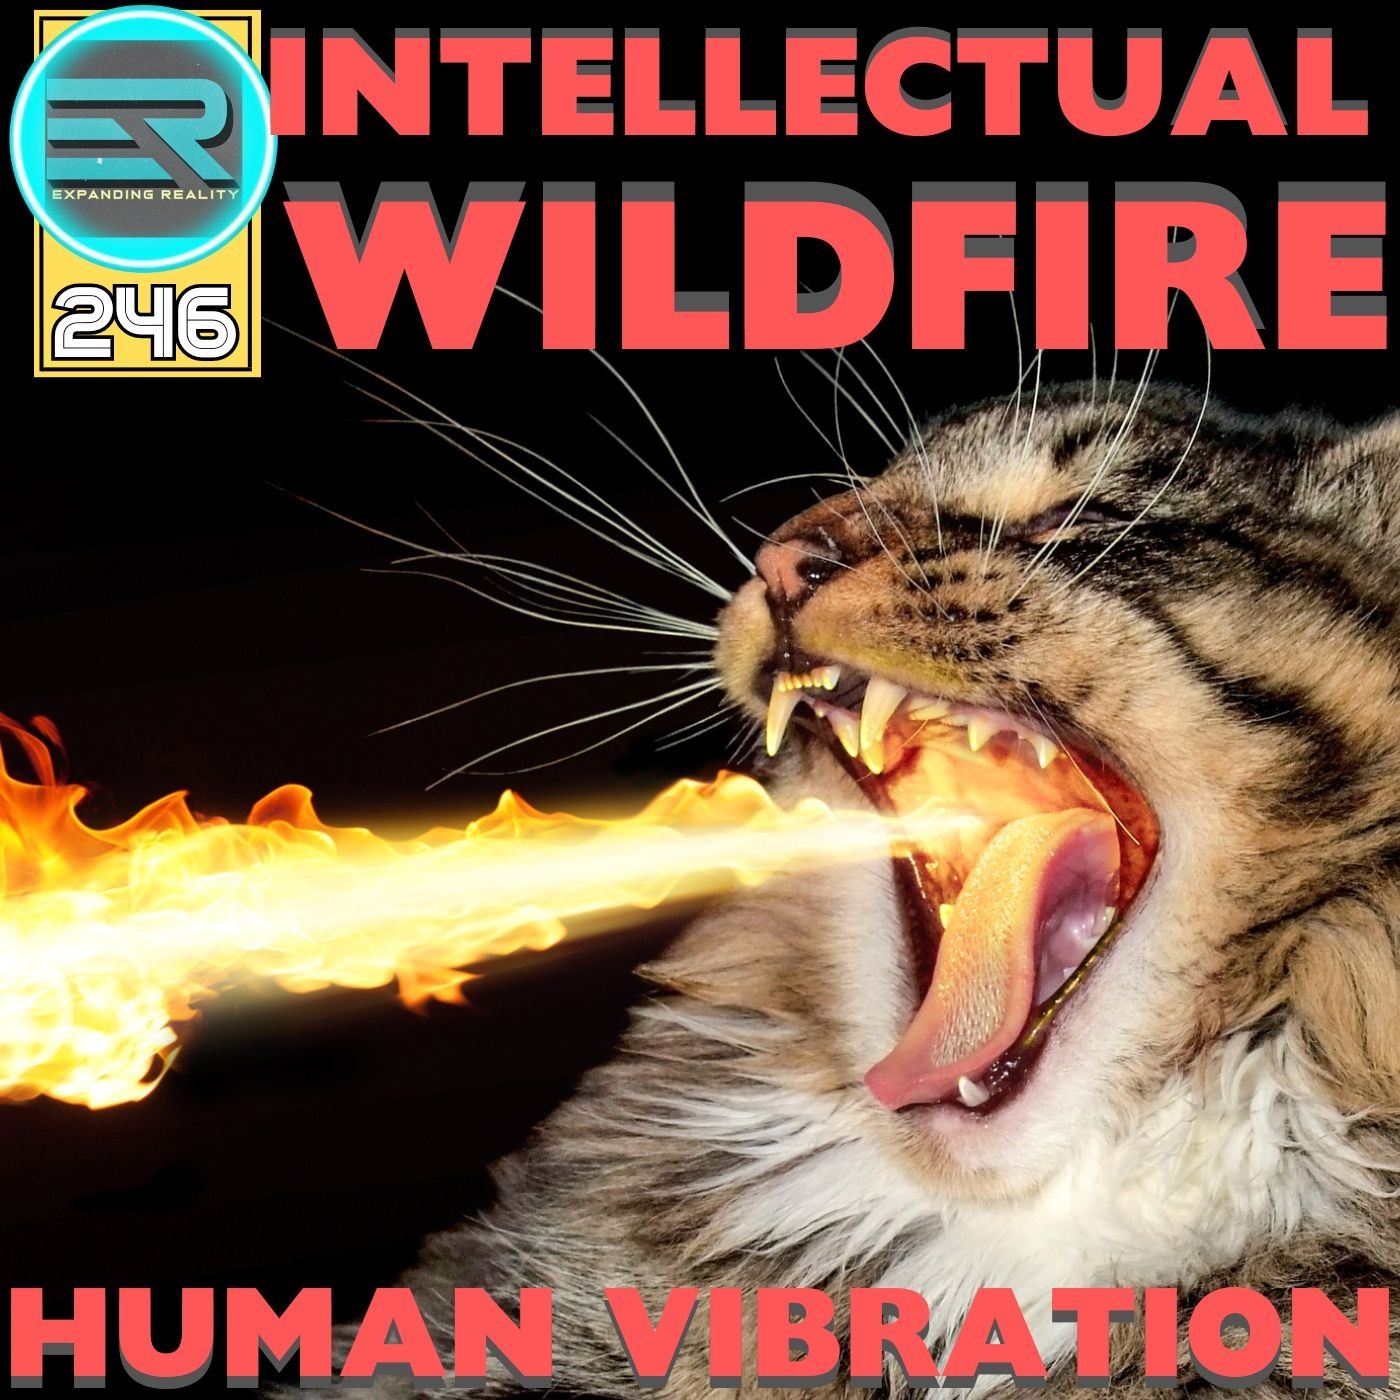 246 | Human Vibration | Intellectual Wildfire